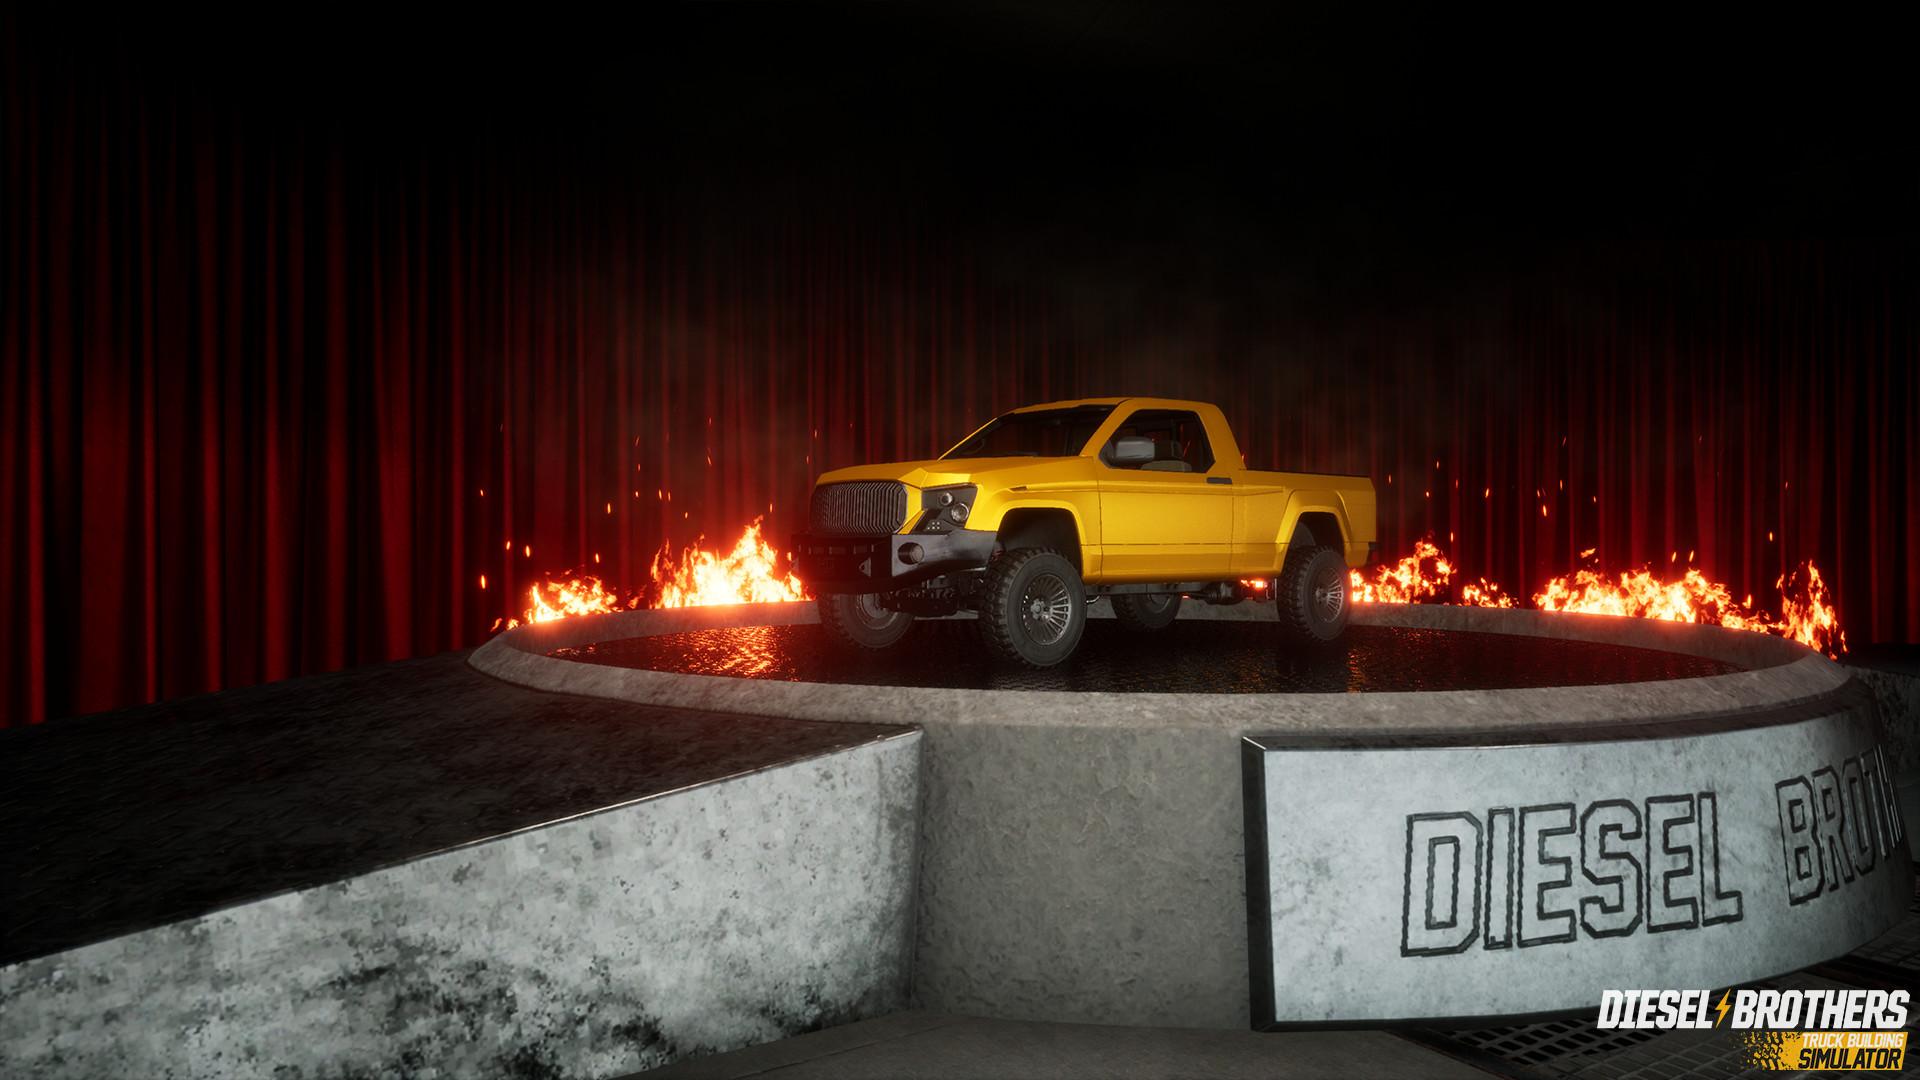 Diesel Brothers: Truck Building Simulator on Steam